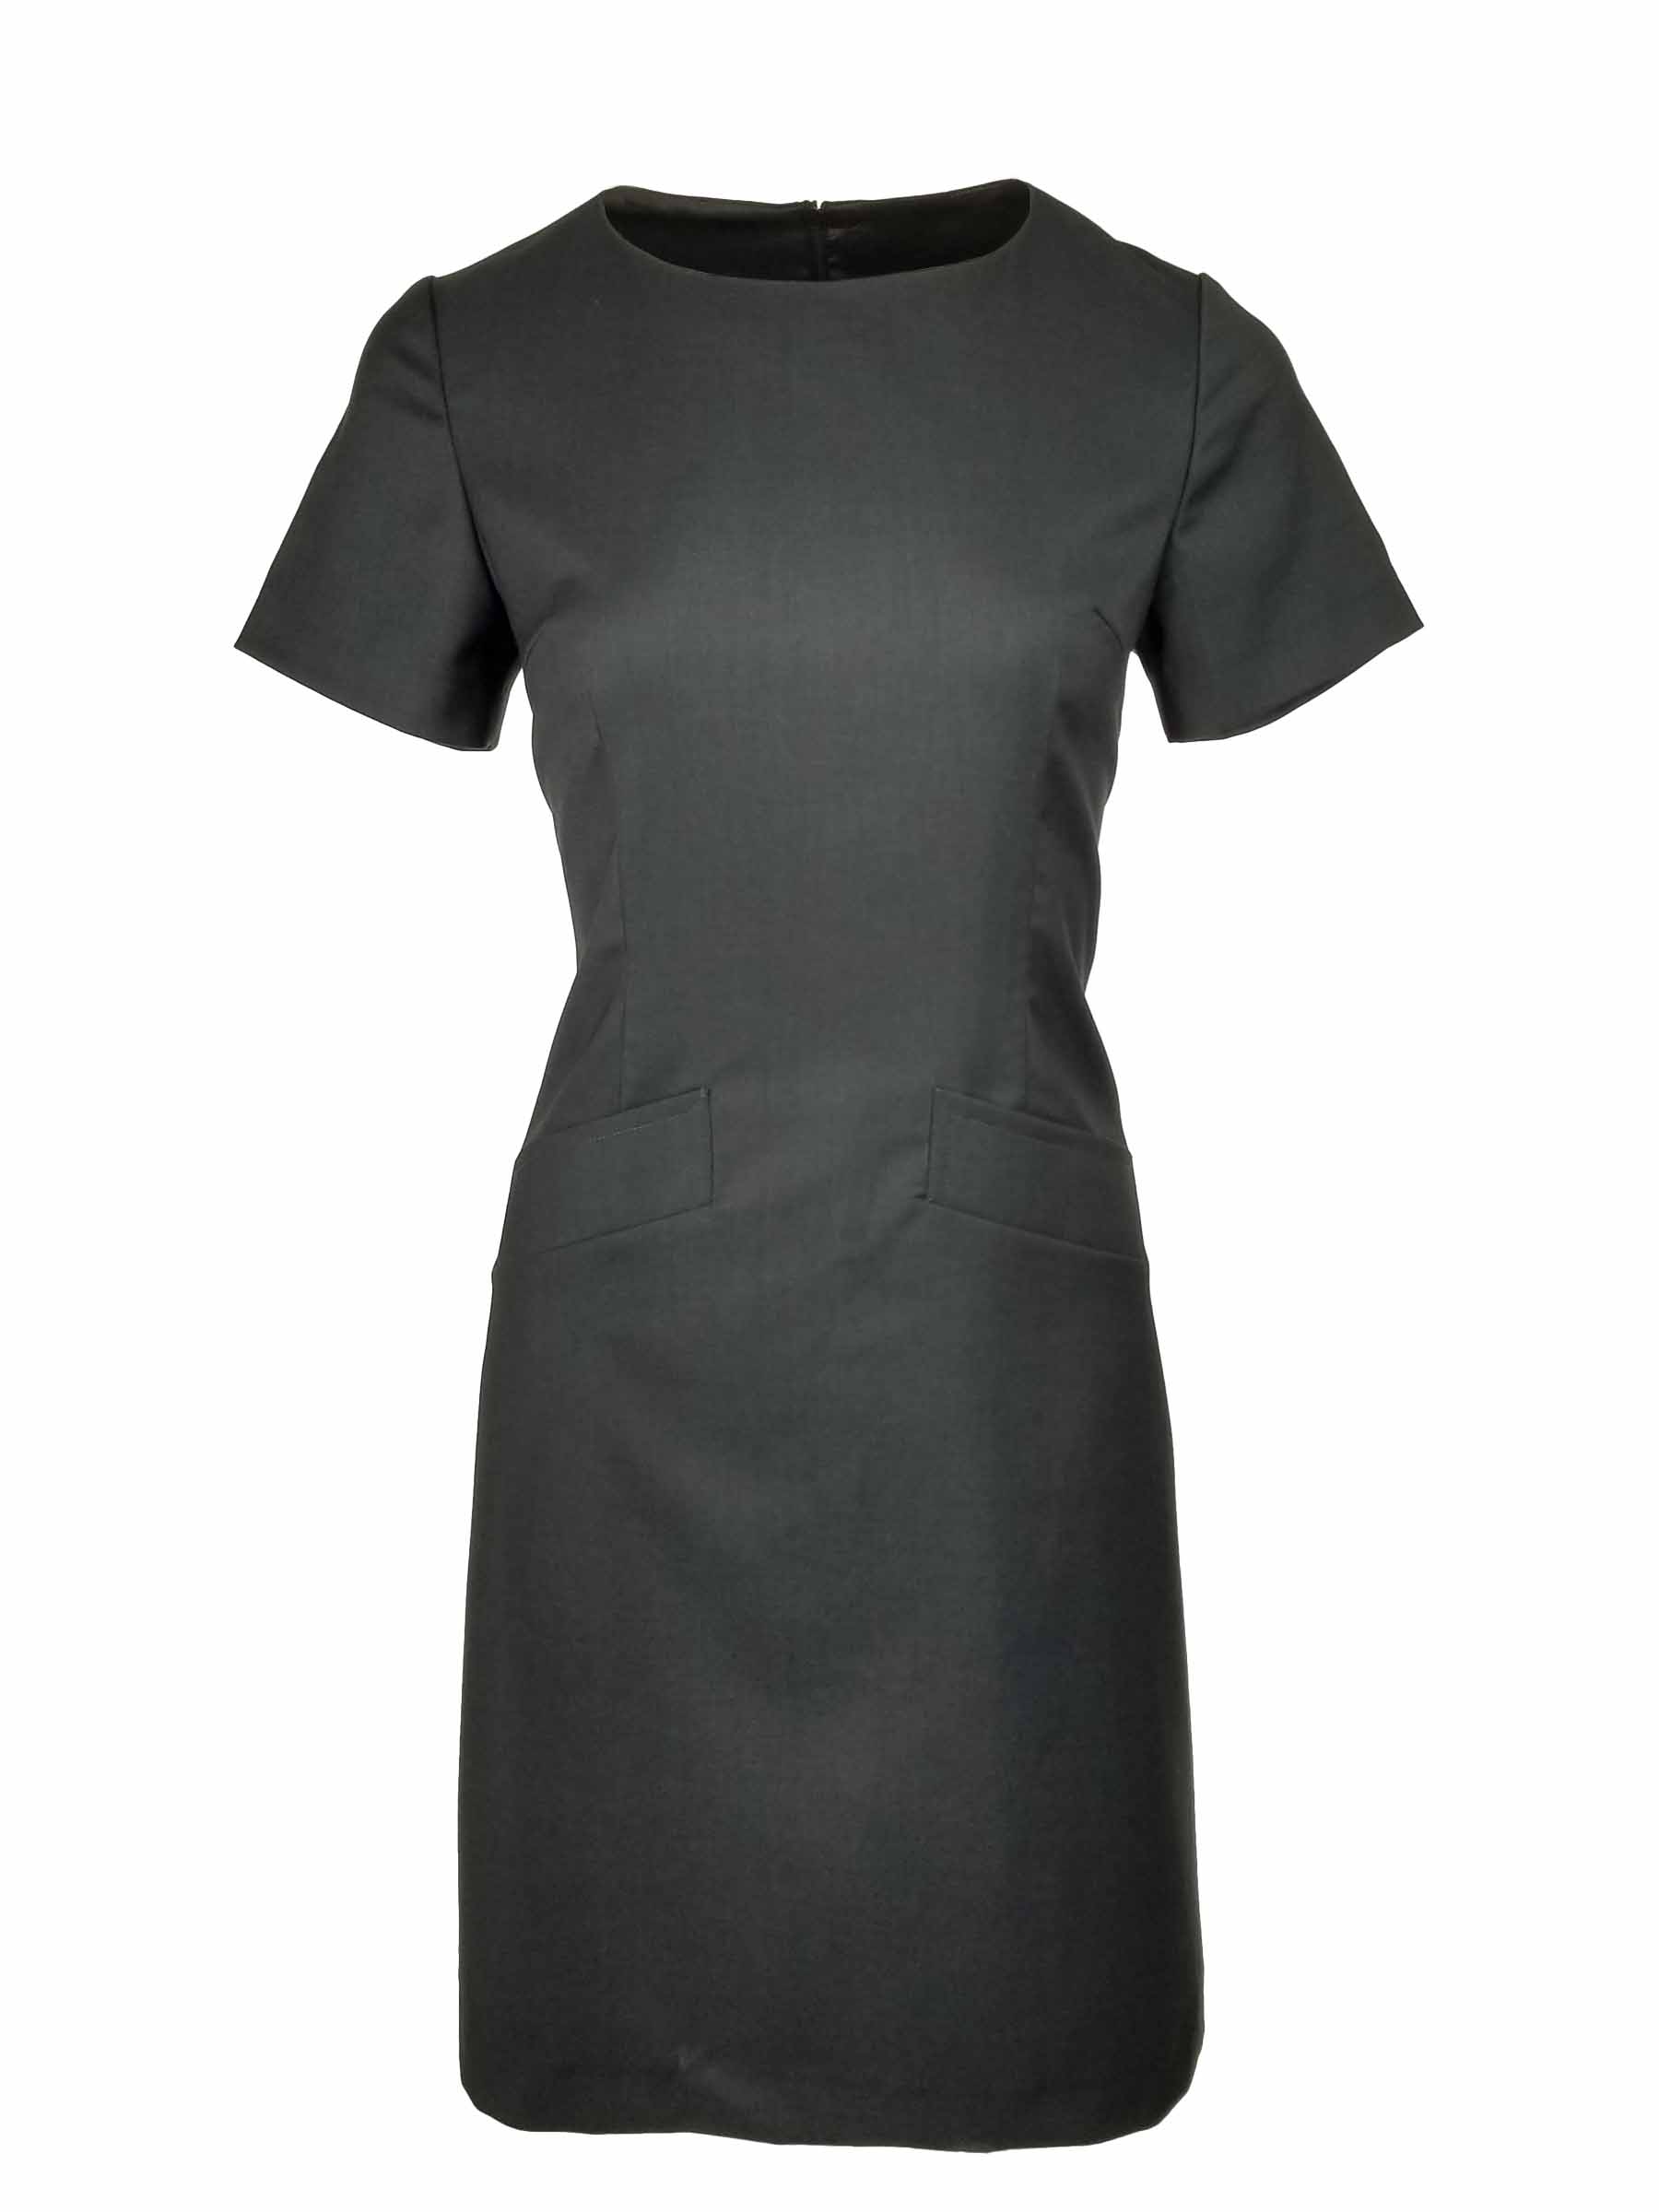 Giorga Short Sleeve A-Line Dress - Charcoal - Uniform Edit